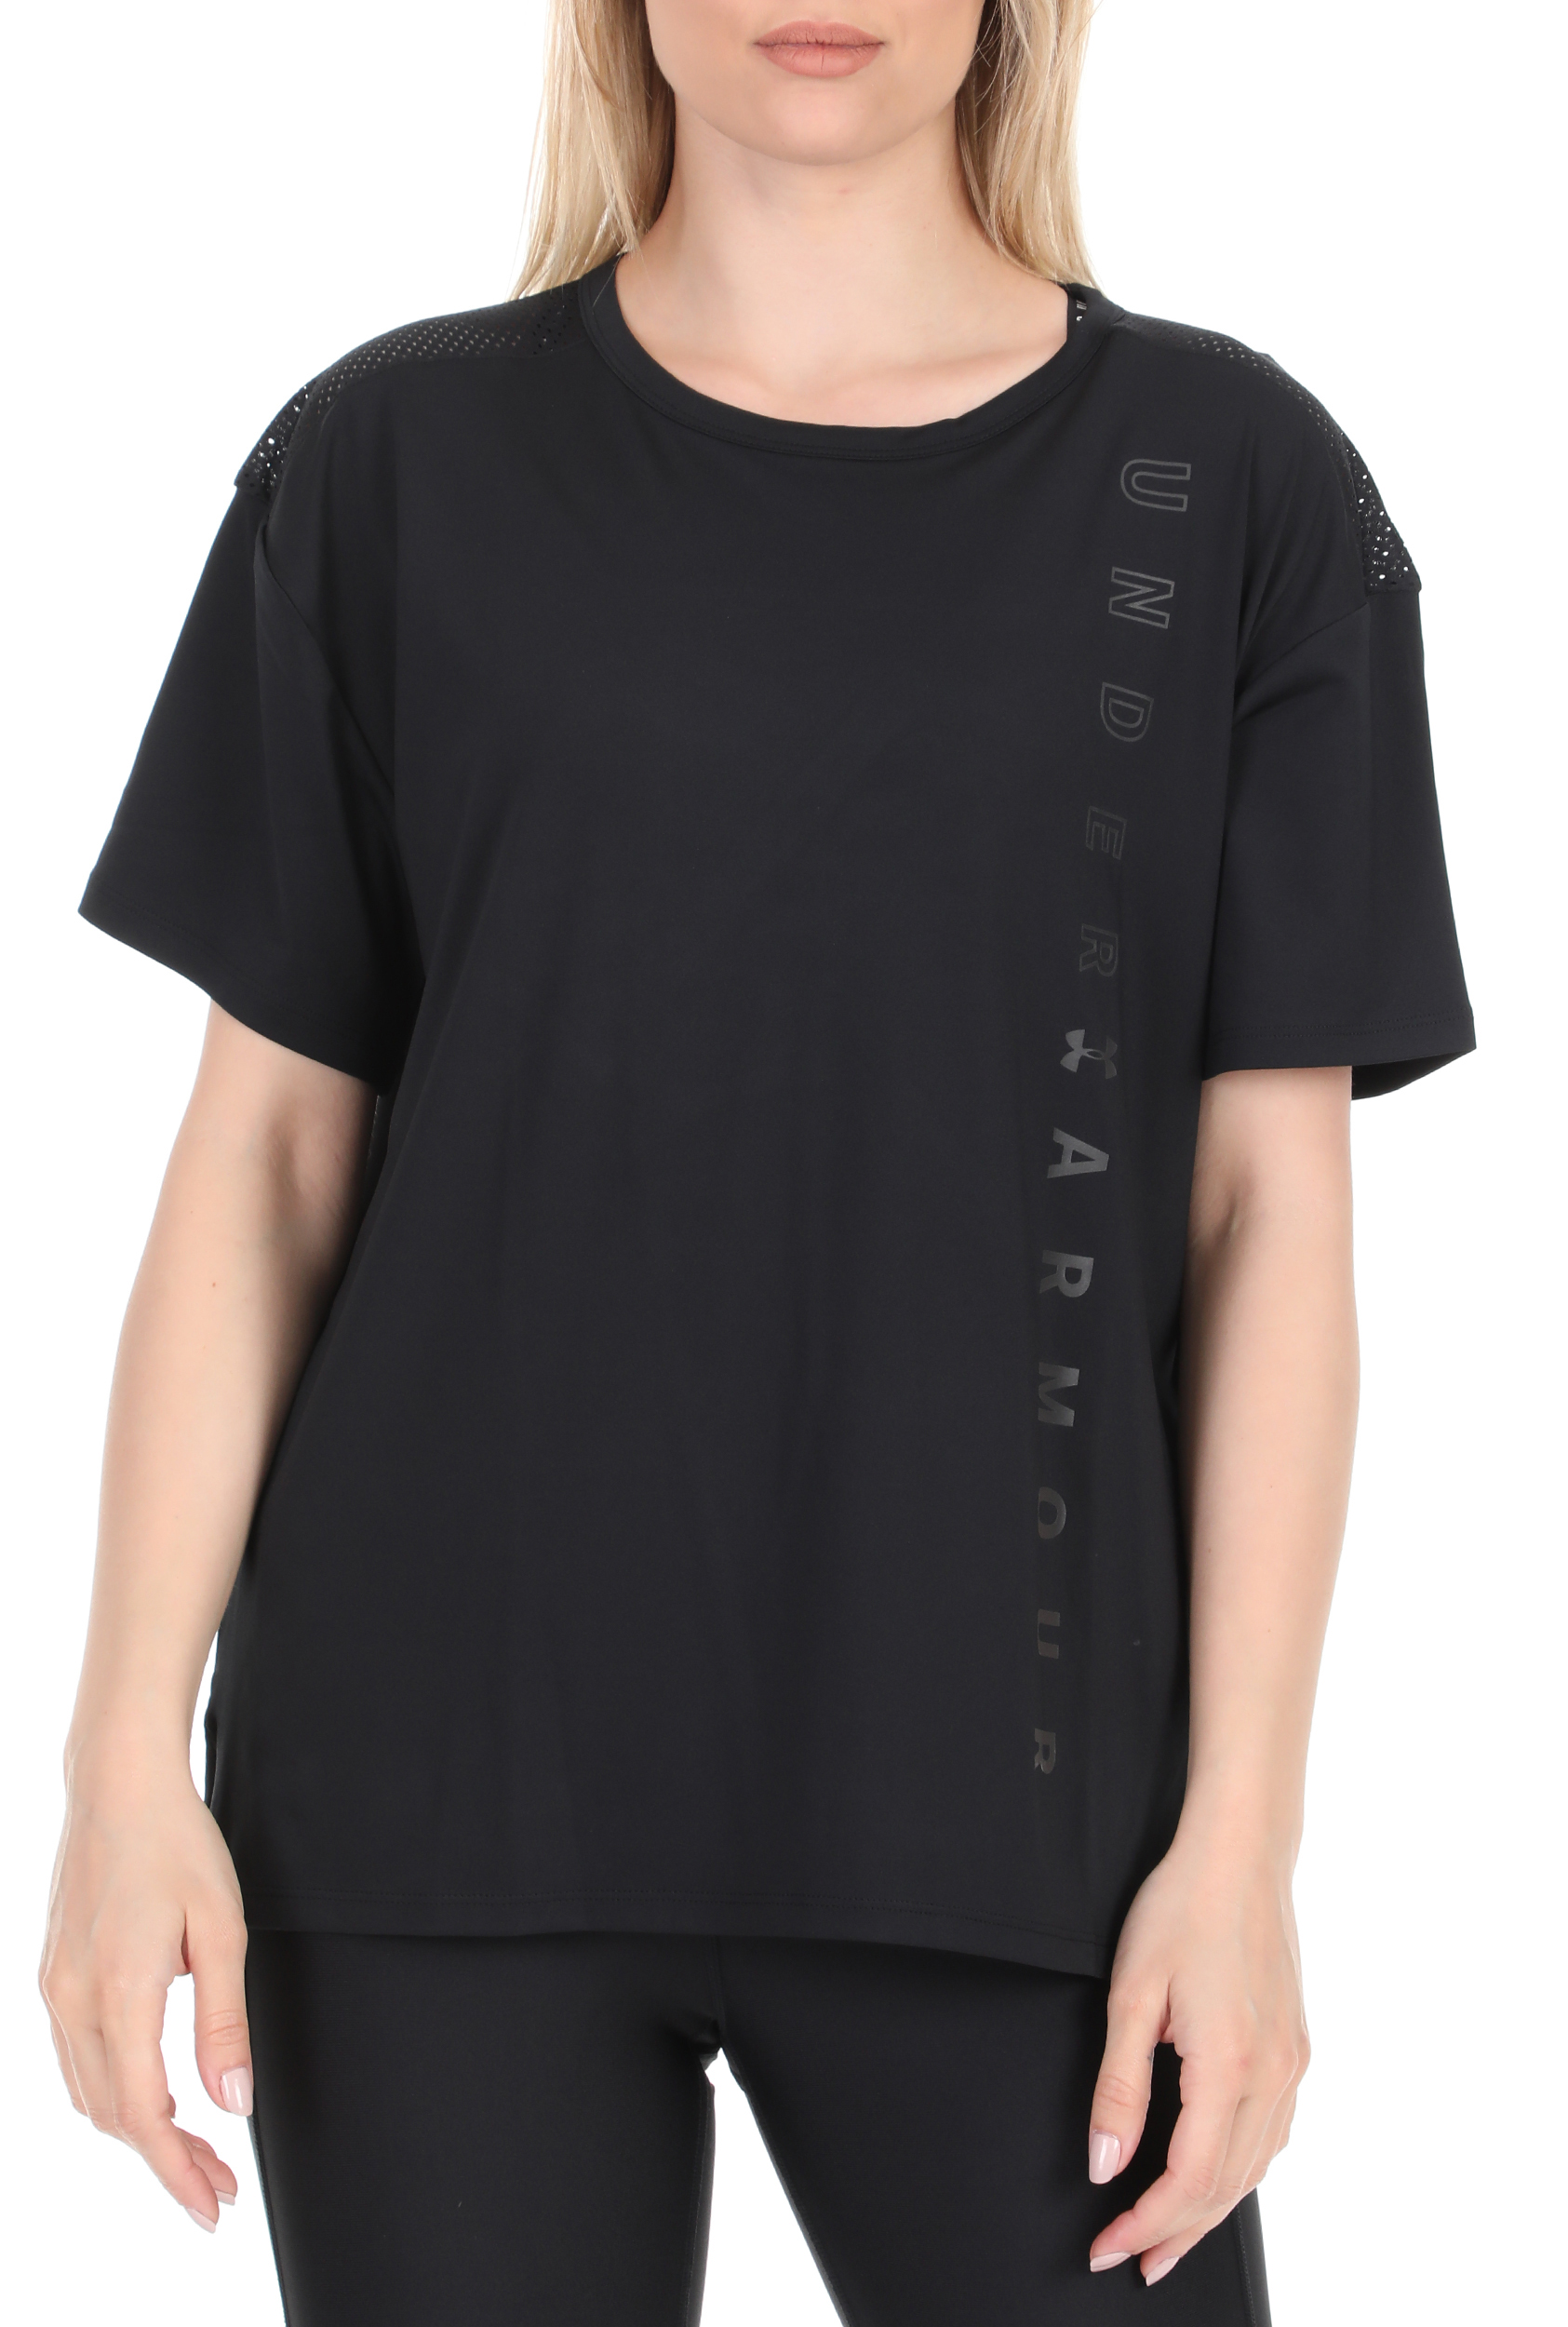 UNDER ARMOUR – Γυναικεία μπλούζα UNDER ARMOUR μαύρη 1781901.0-7191